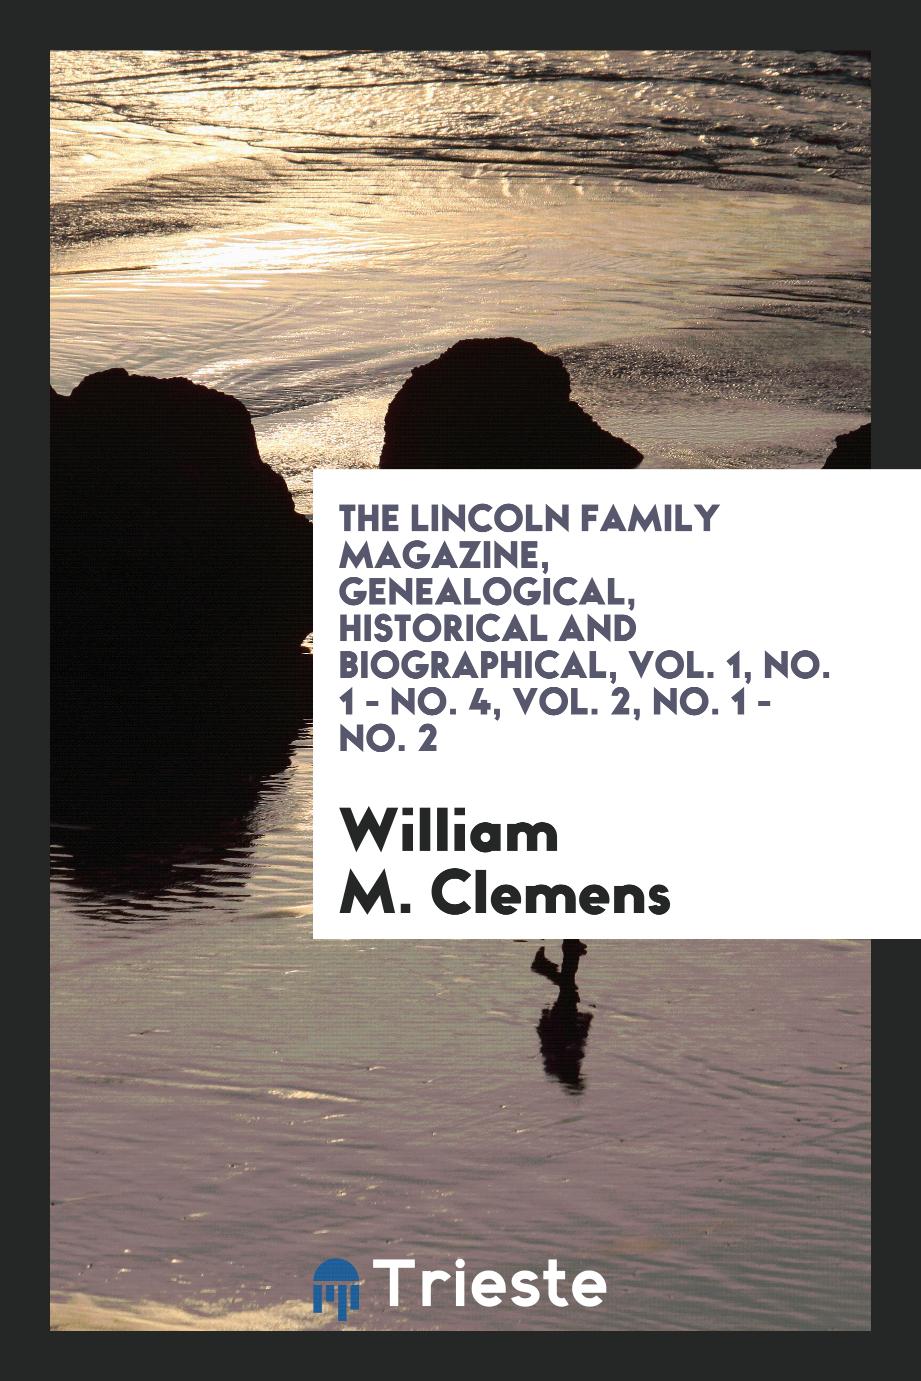 The Lincoln family magazine, Genealogical, Historical and Biographical, Vol. 1, No. 1 - No. 4, Vol. 2, No. 1 - No. 2